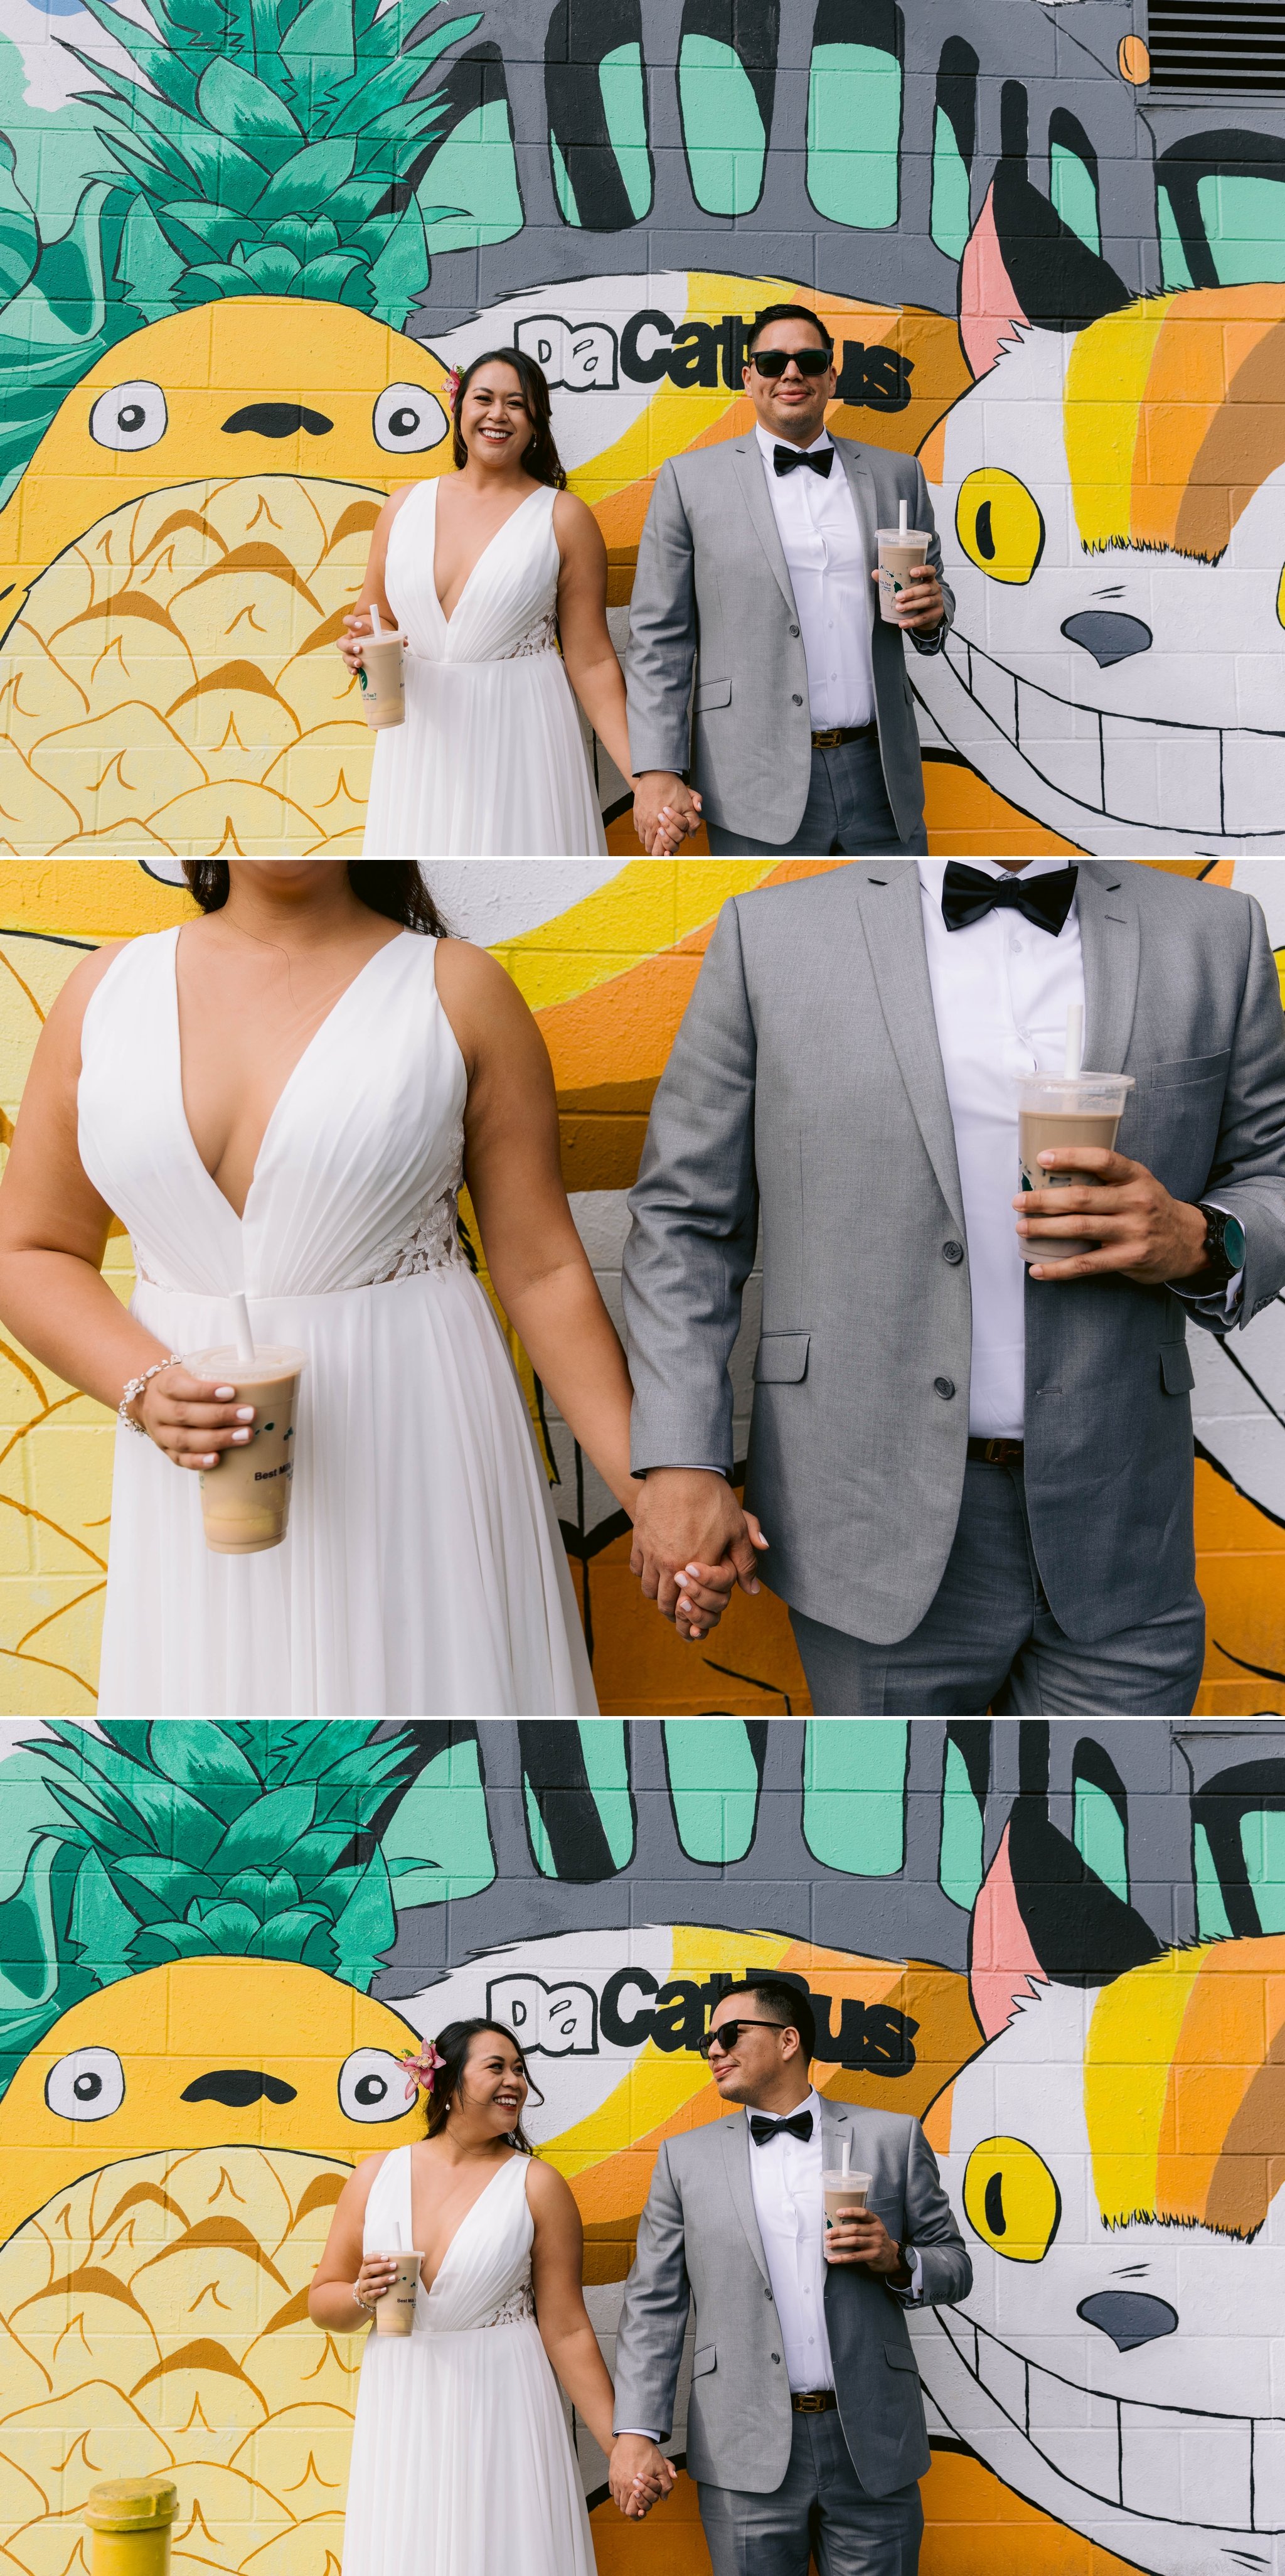 Wedding Photos at the Murals In Kakaako with Boba Tea - Fun Adventure Elopement in Oahu - Hawaii Wedding Photographer